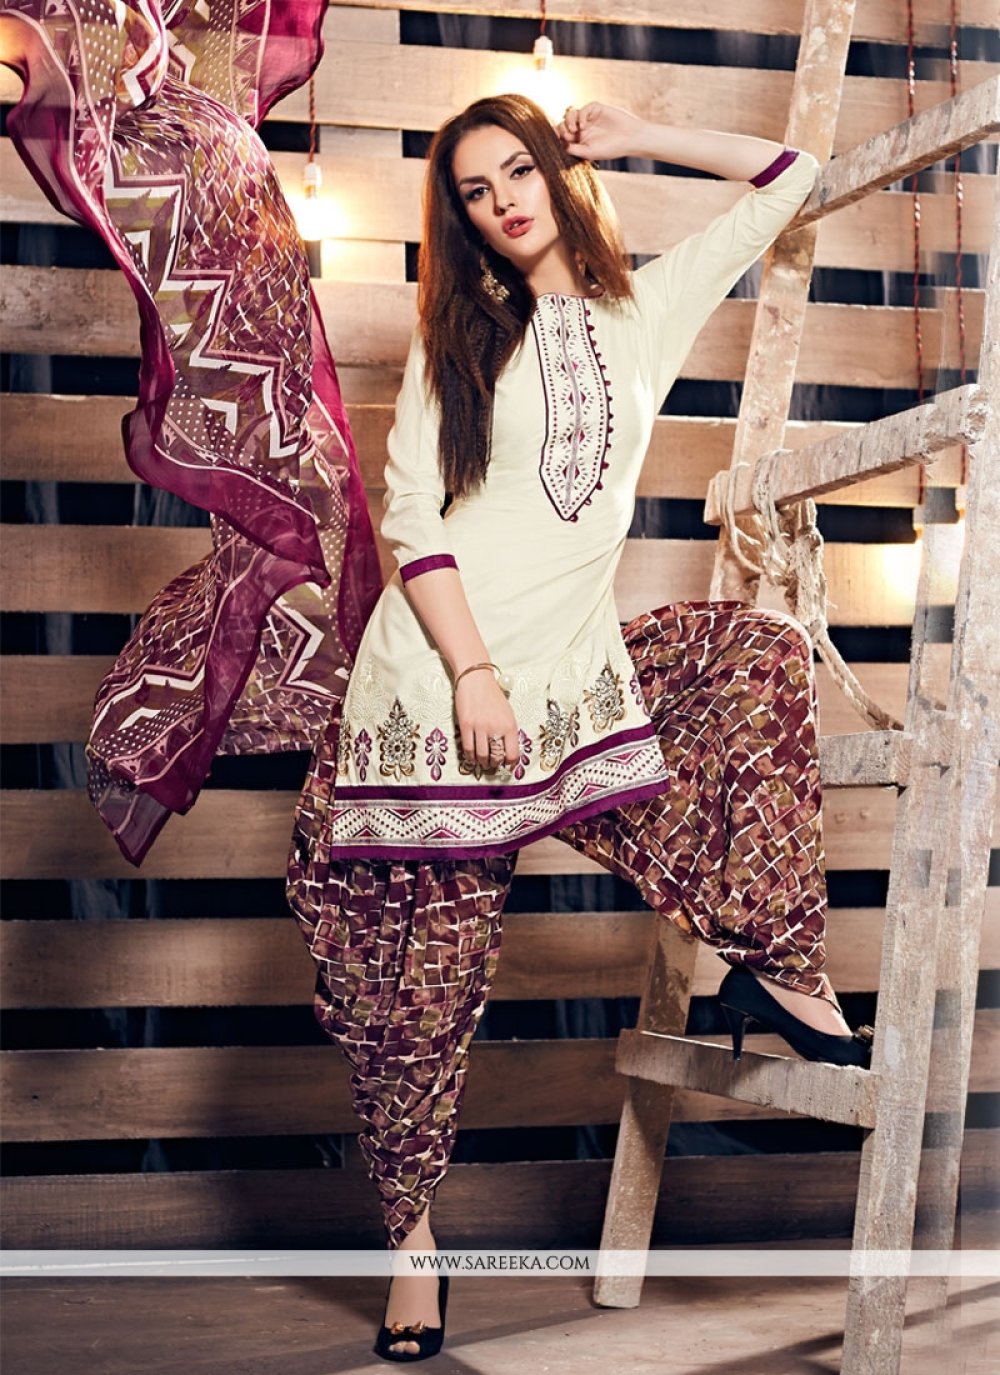 Popular $39 - $52 - Buy Punjabi Suits Online, Latest Punjabi Patiala Suit,  Salwar Kameez Shopping